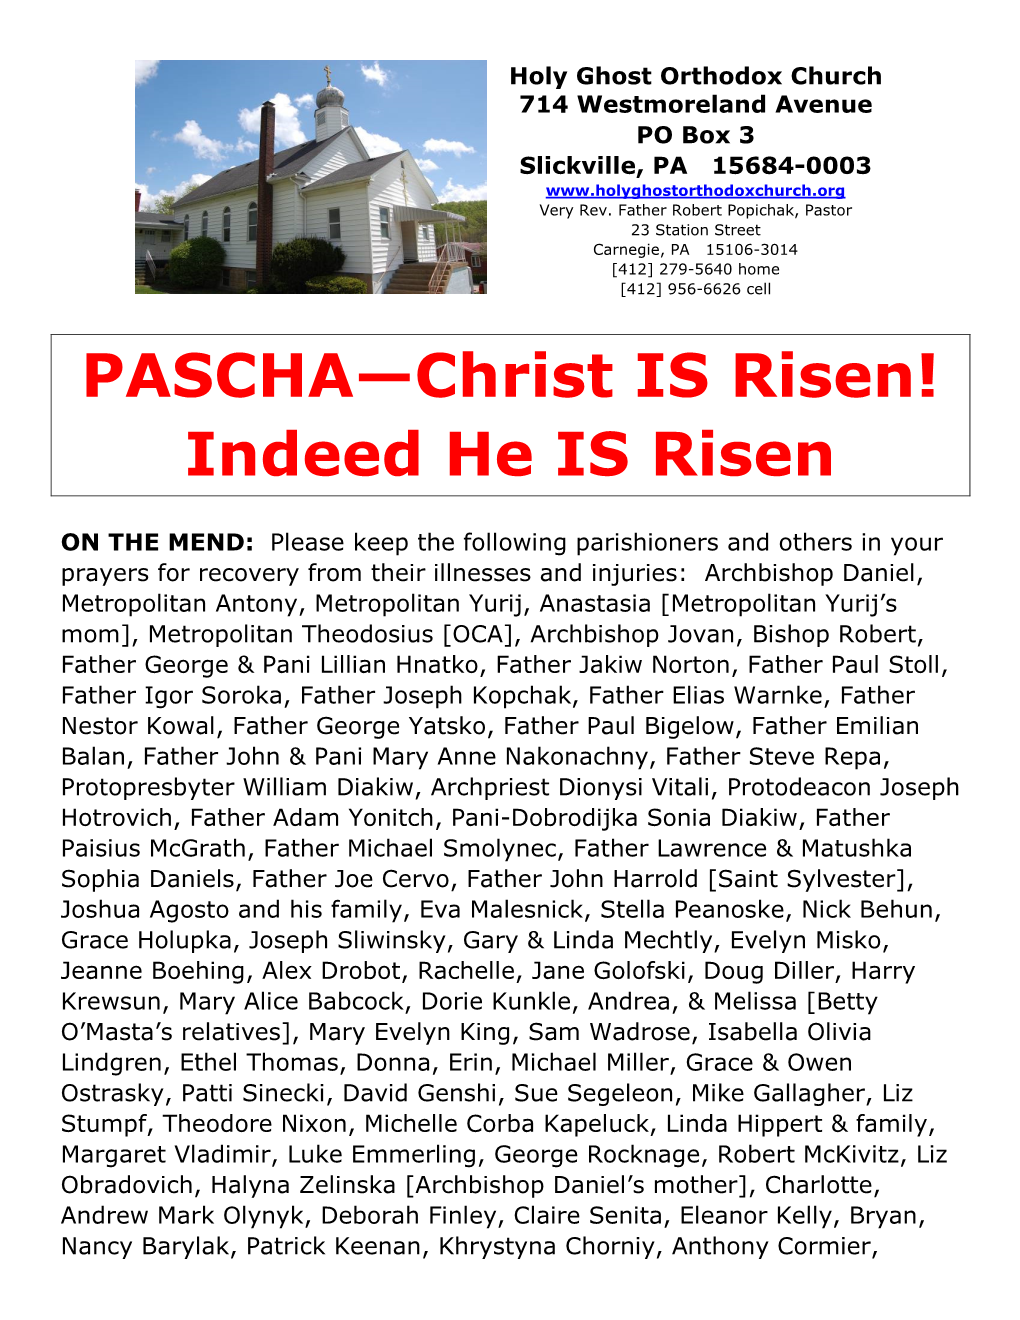 PASCHA—Christ IS Risen! Indeed He IS Risen